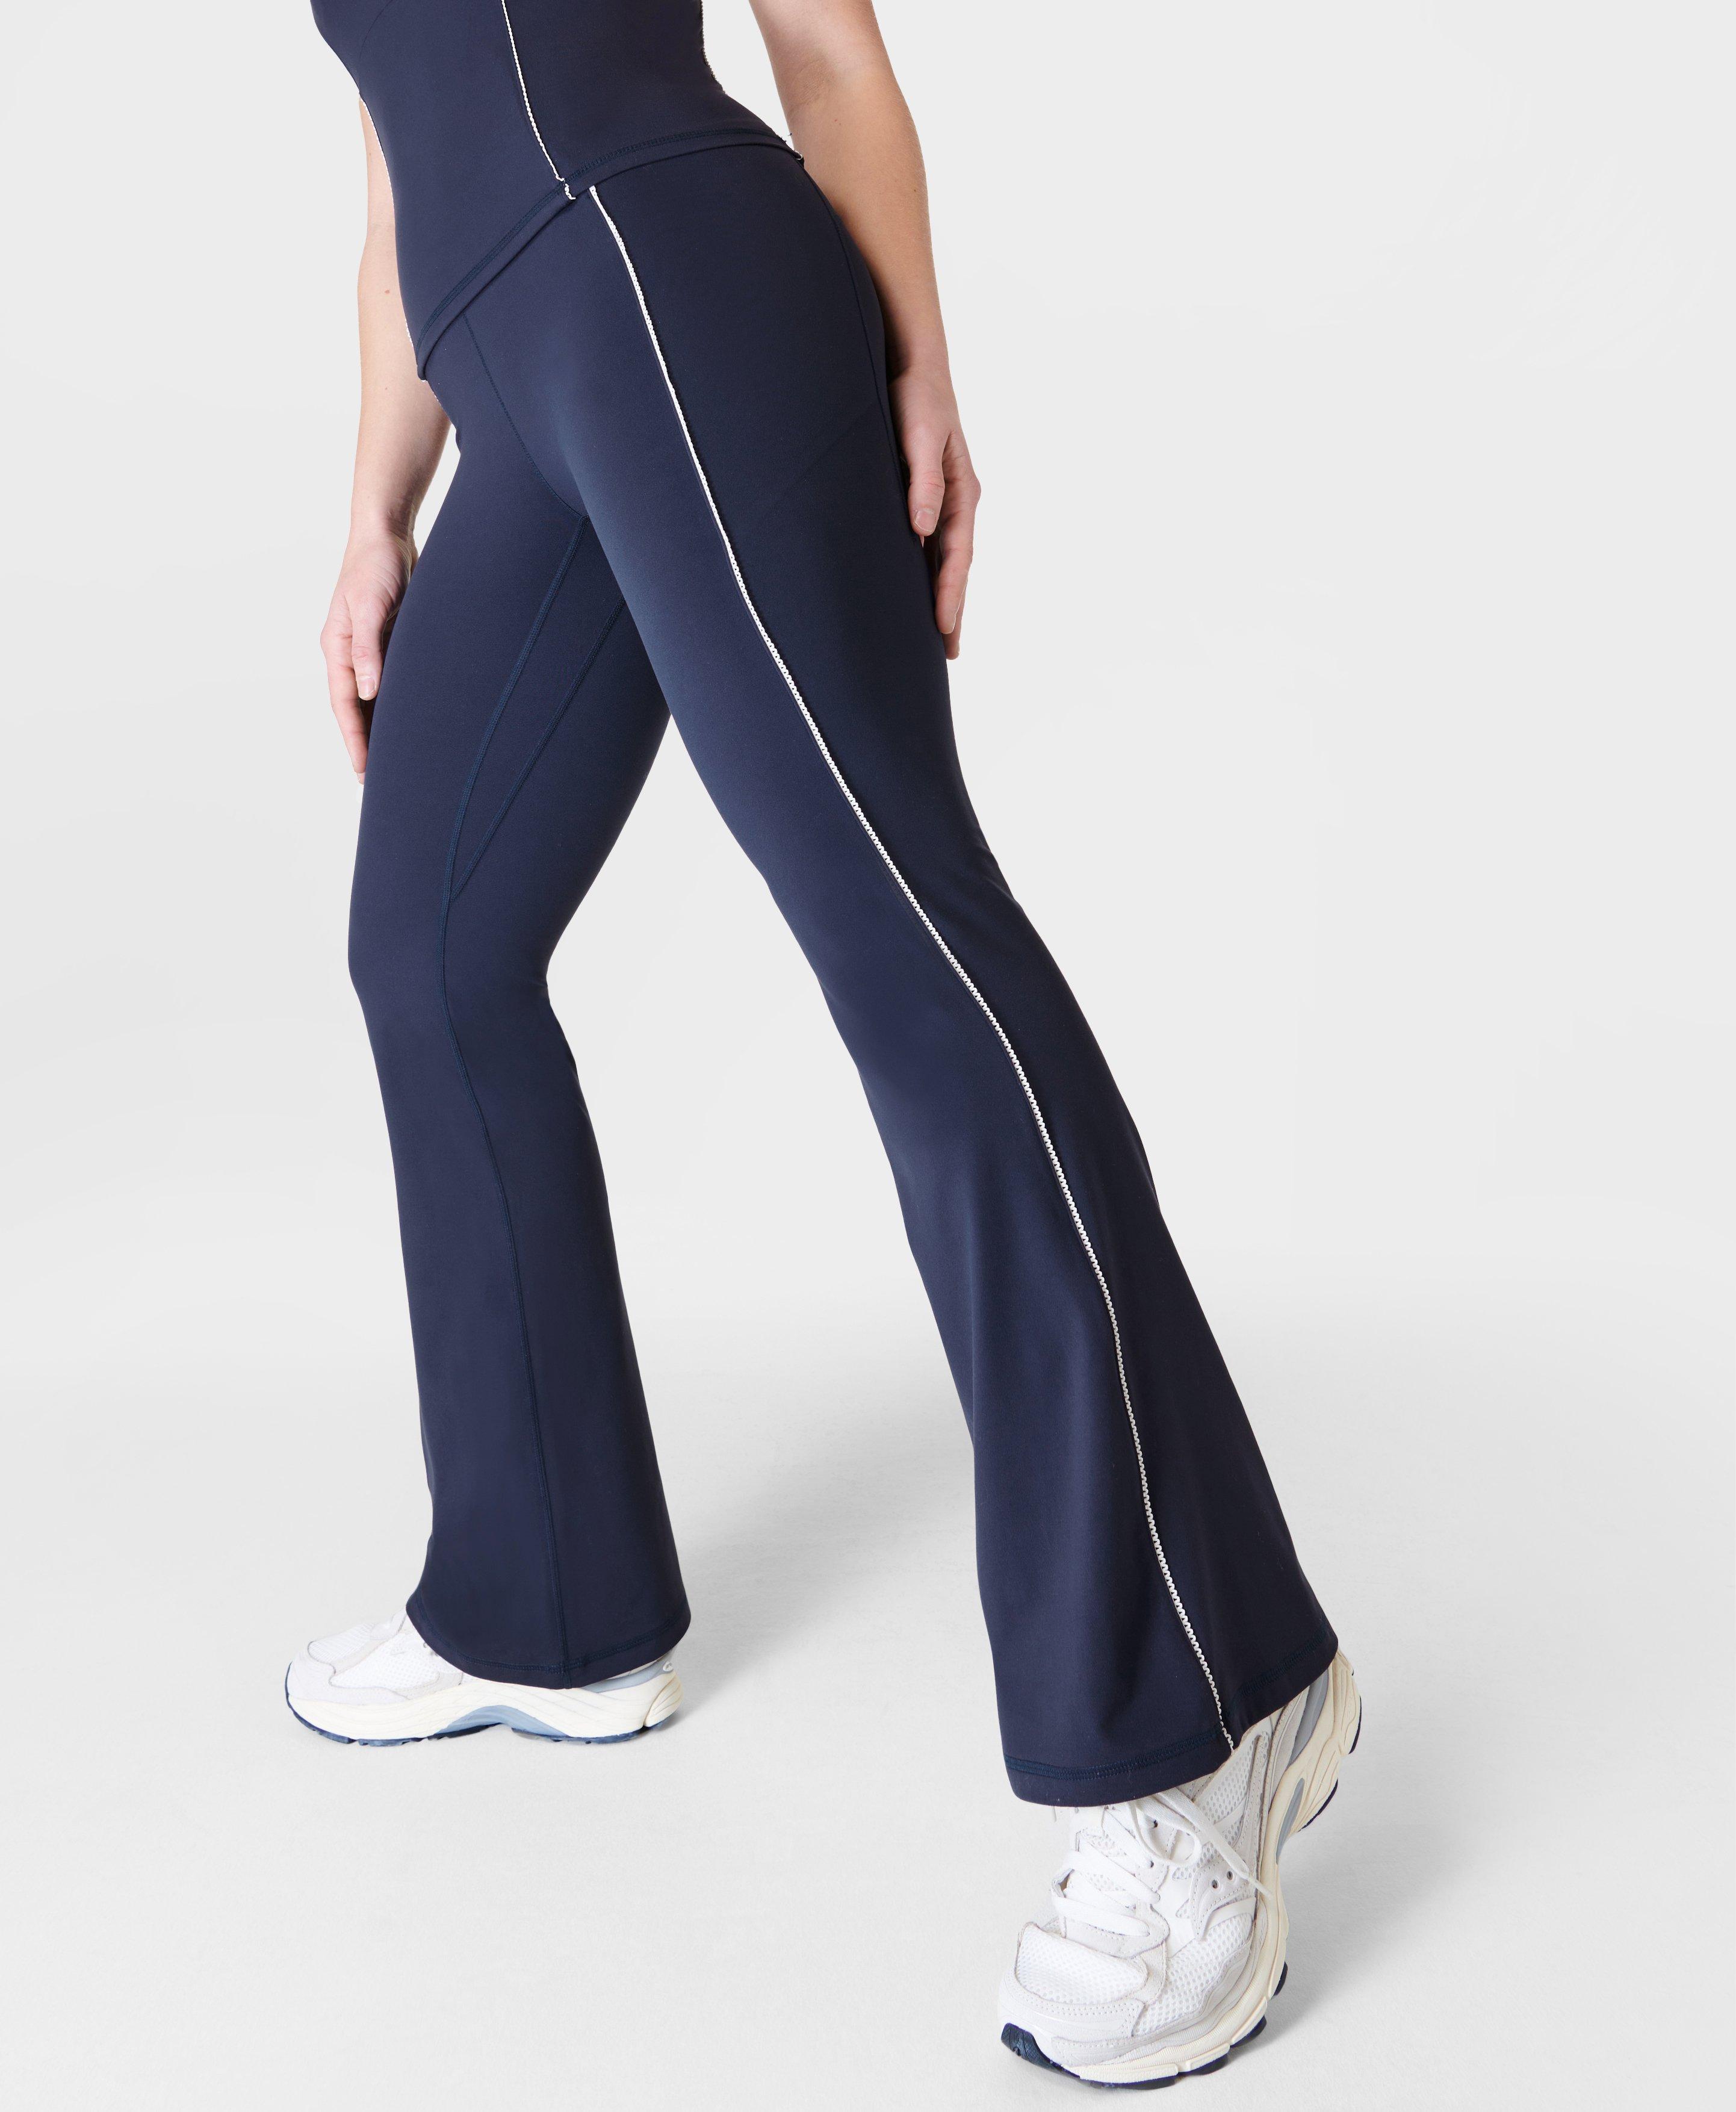 Super Soft Picot Lace Flare Pants - Navy Blue